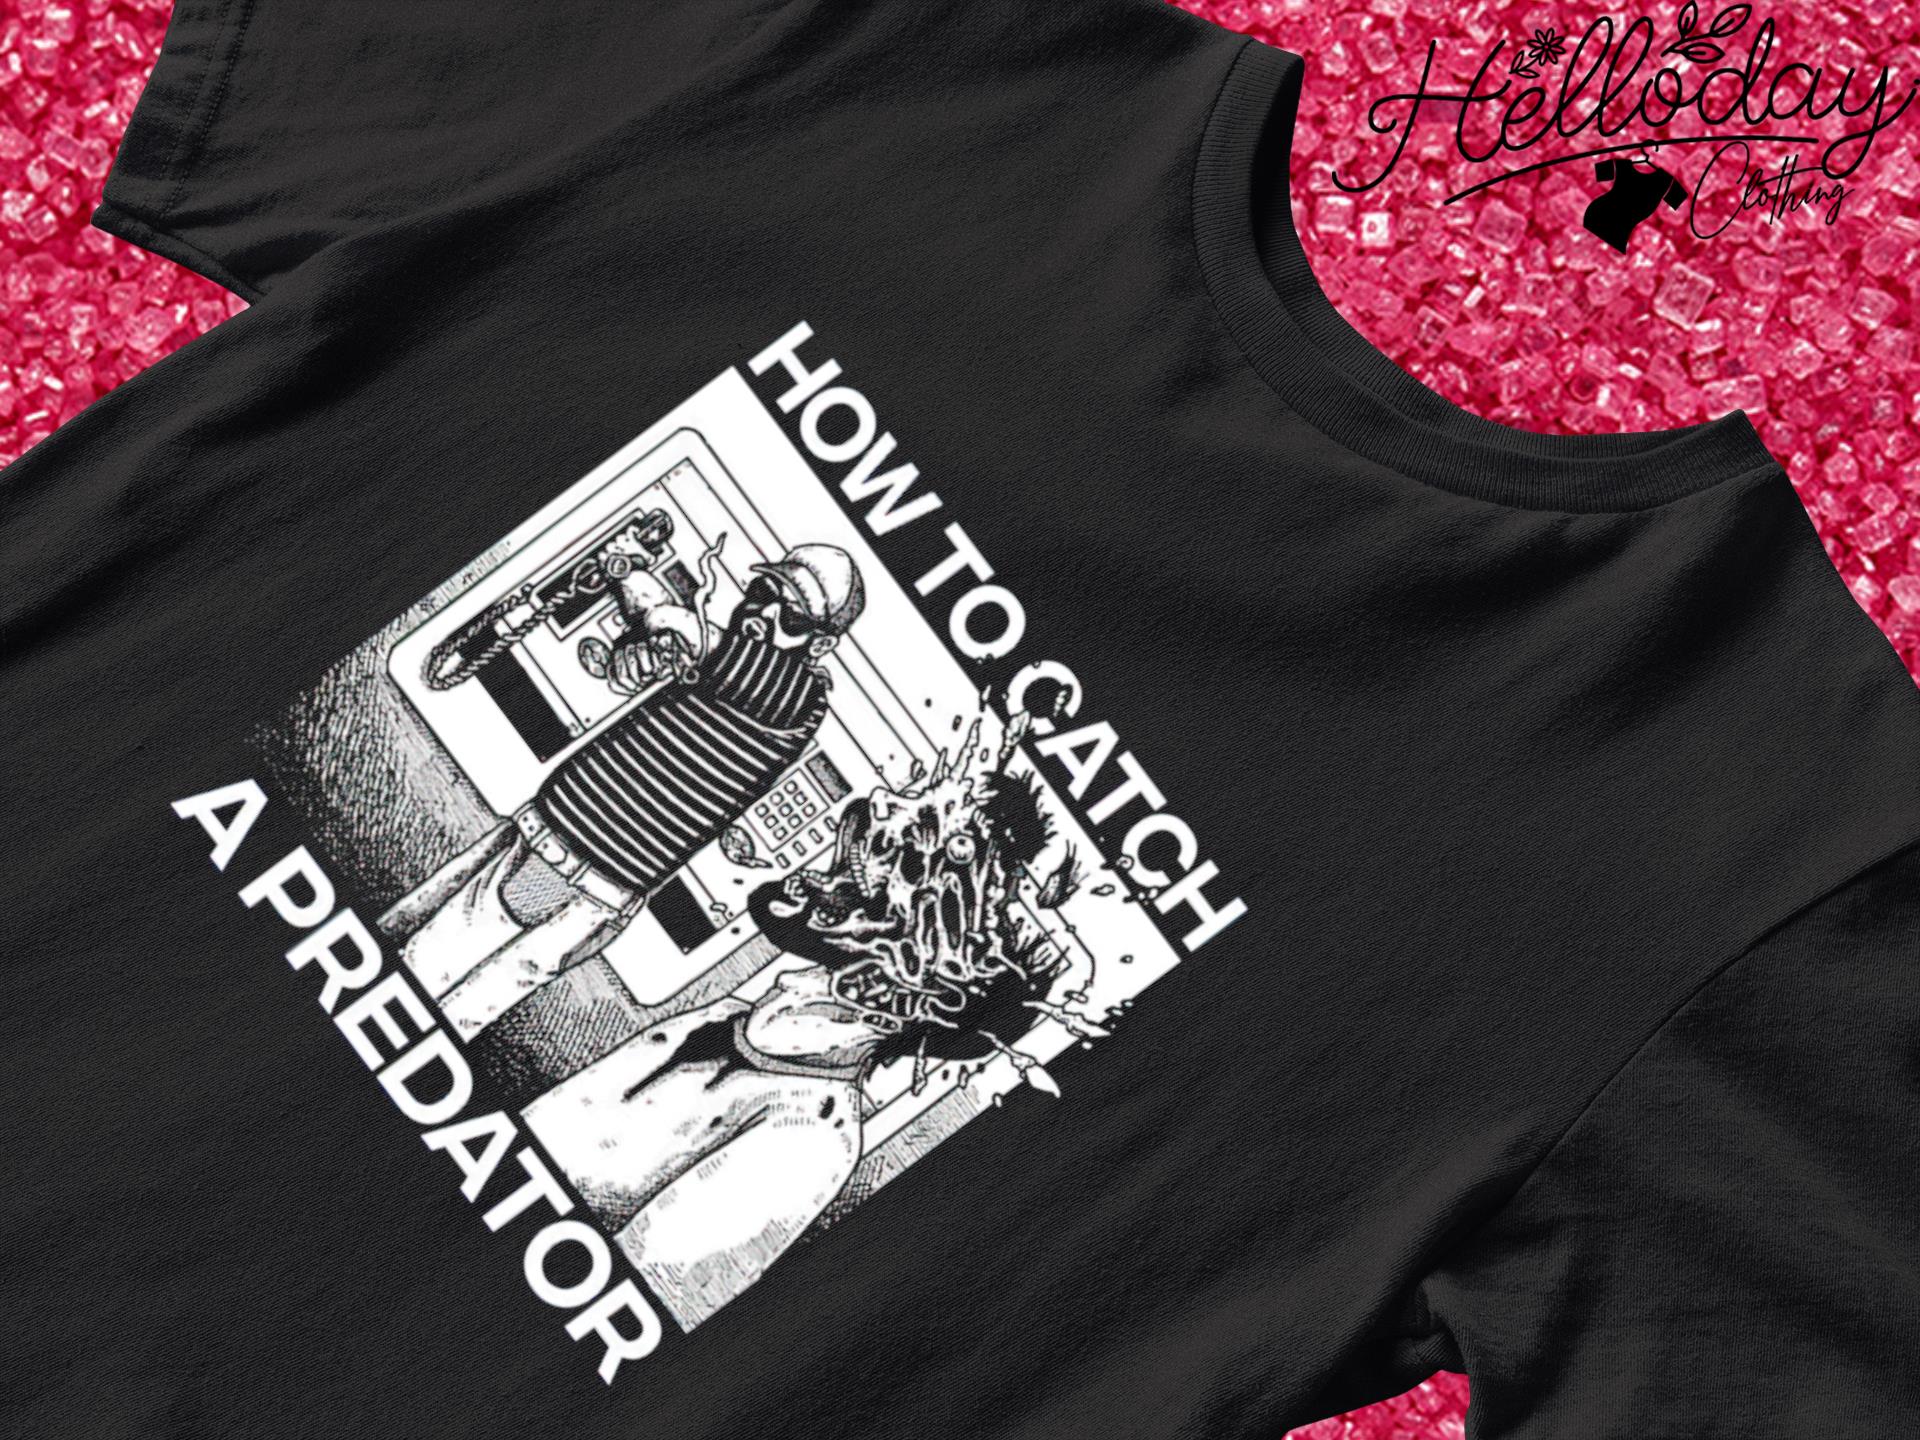 How To Catch A Predator T Shirt, Custom prints store